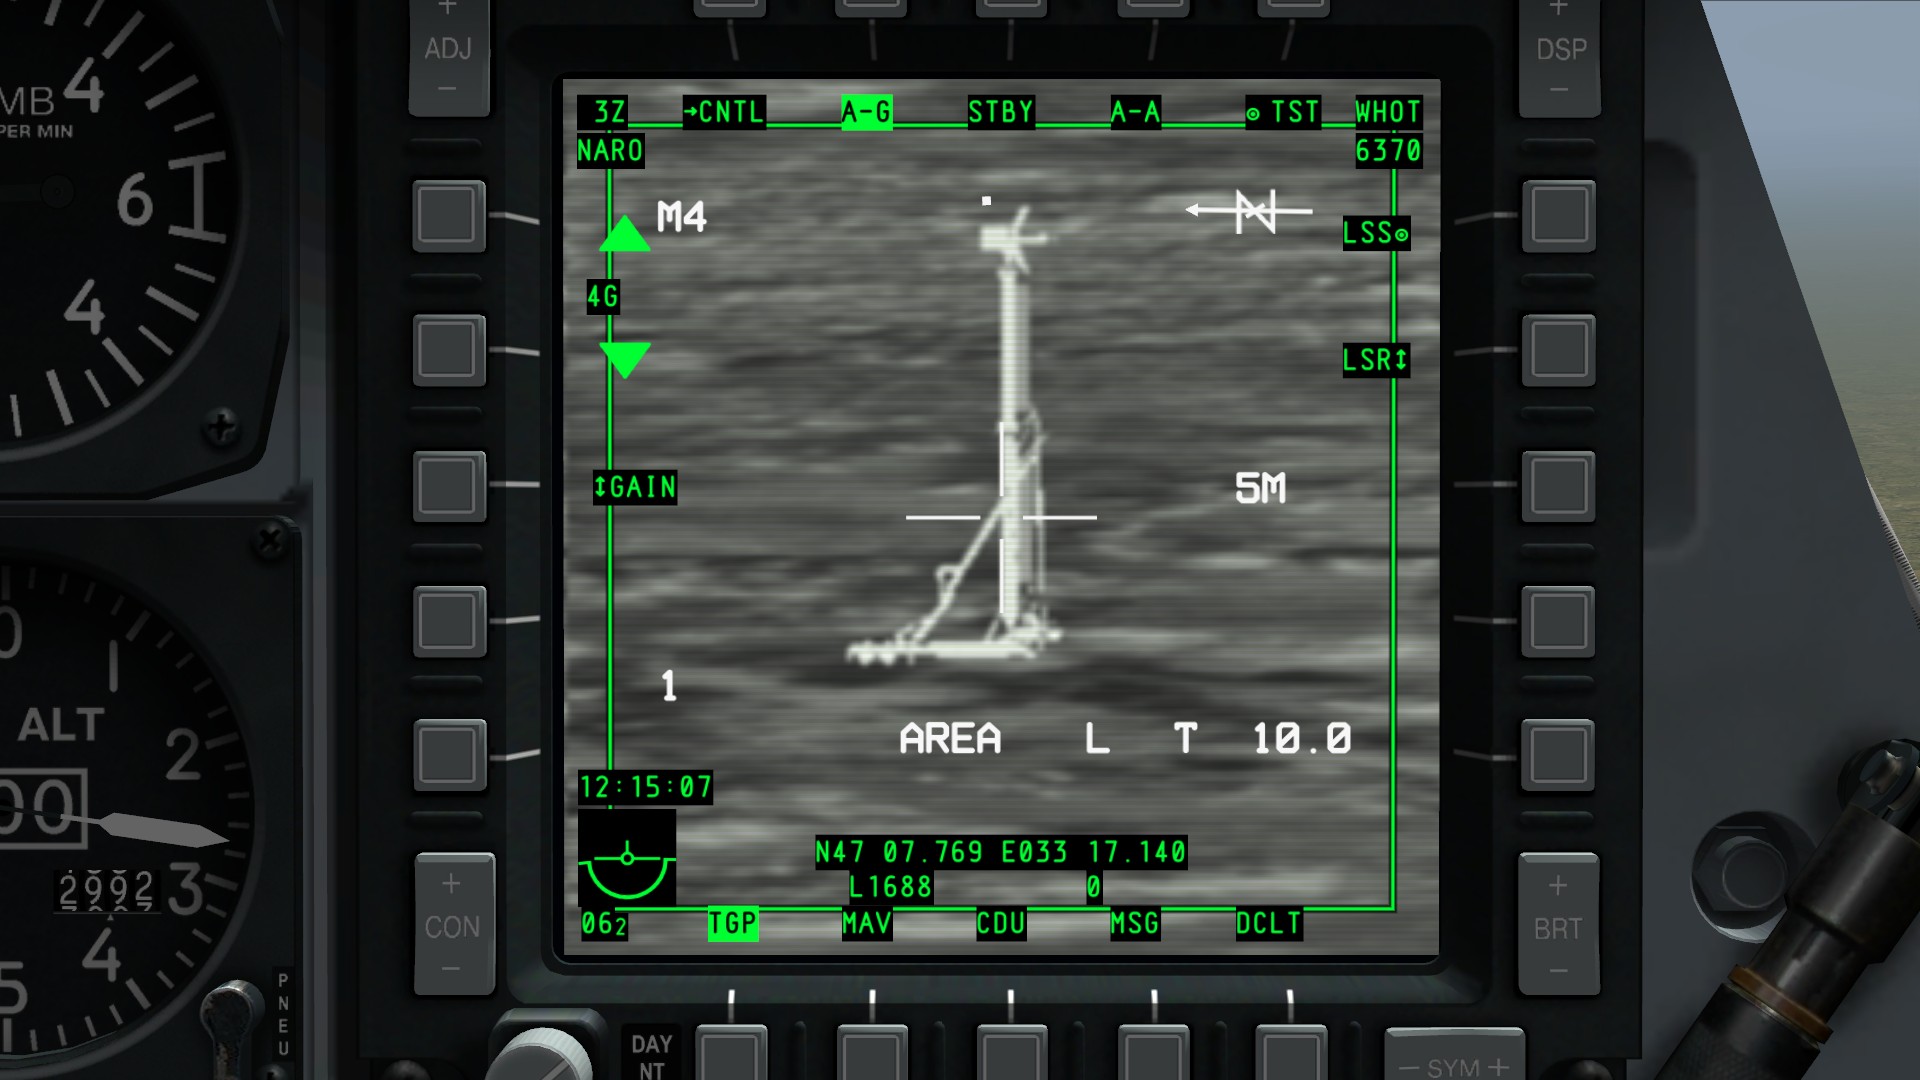 SA10 Search Radar 5n66m WHOT.jpg